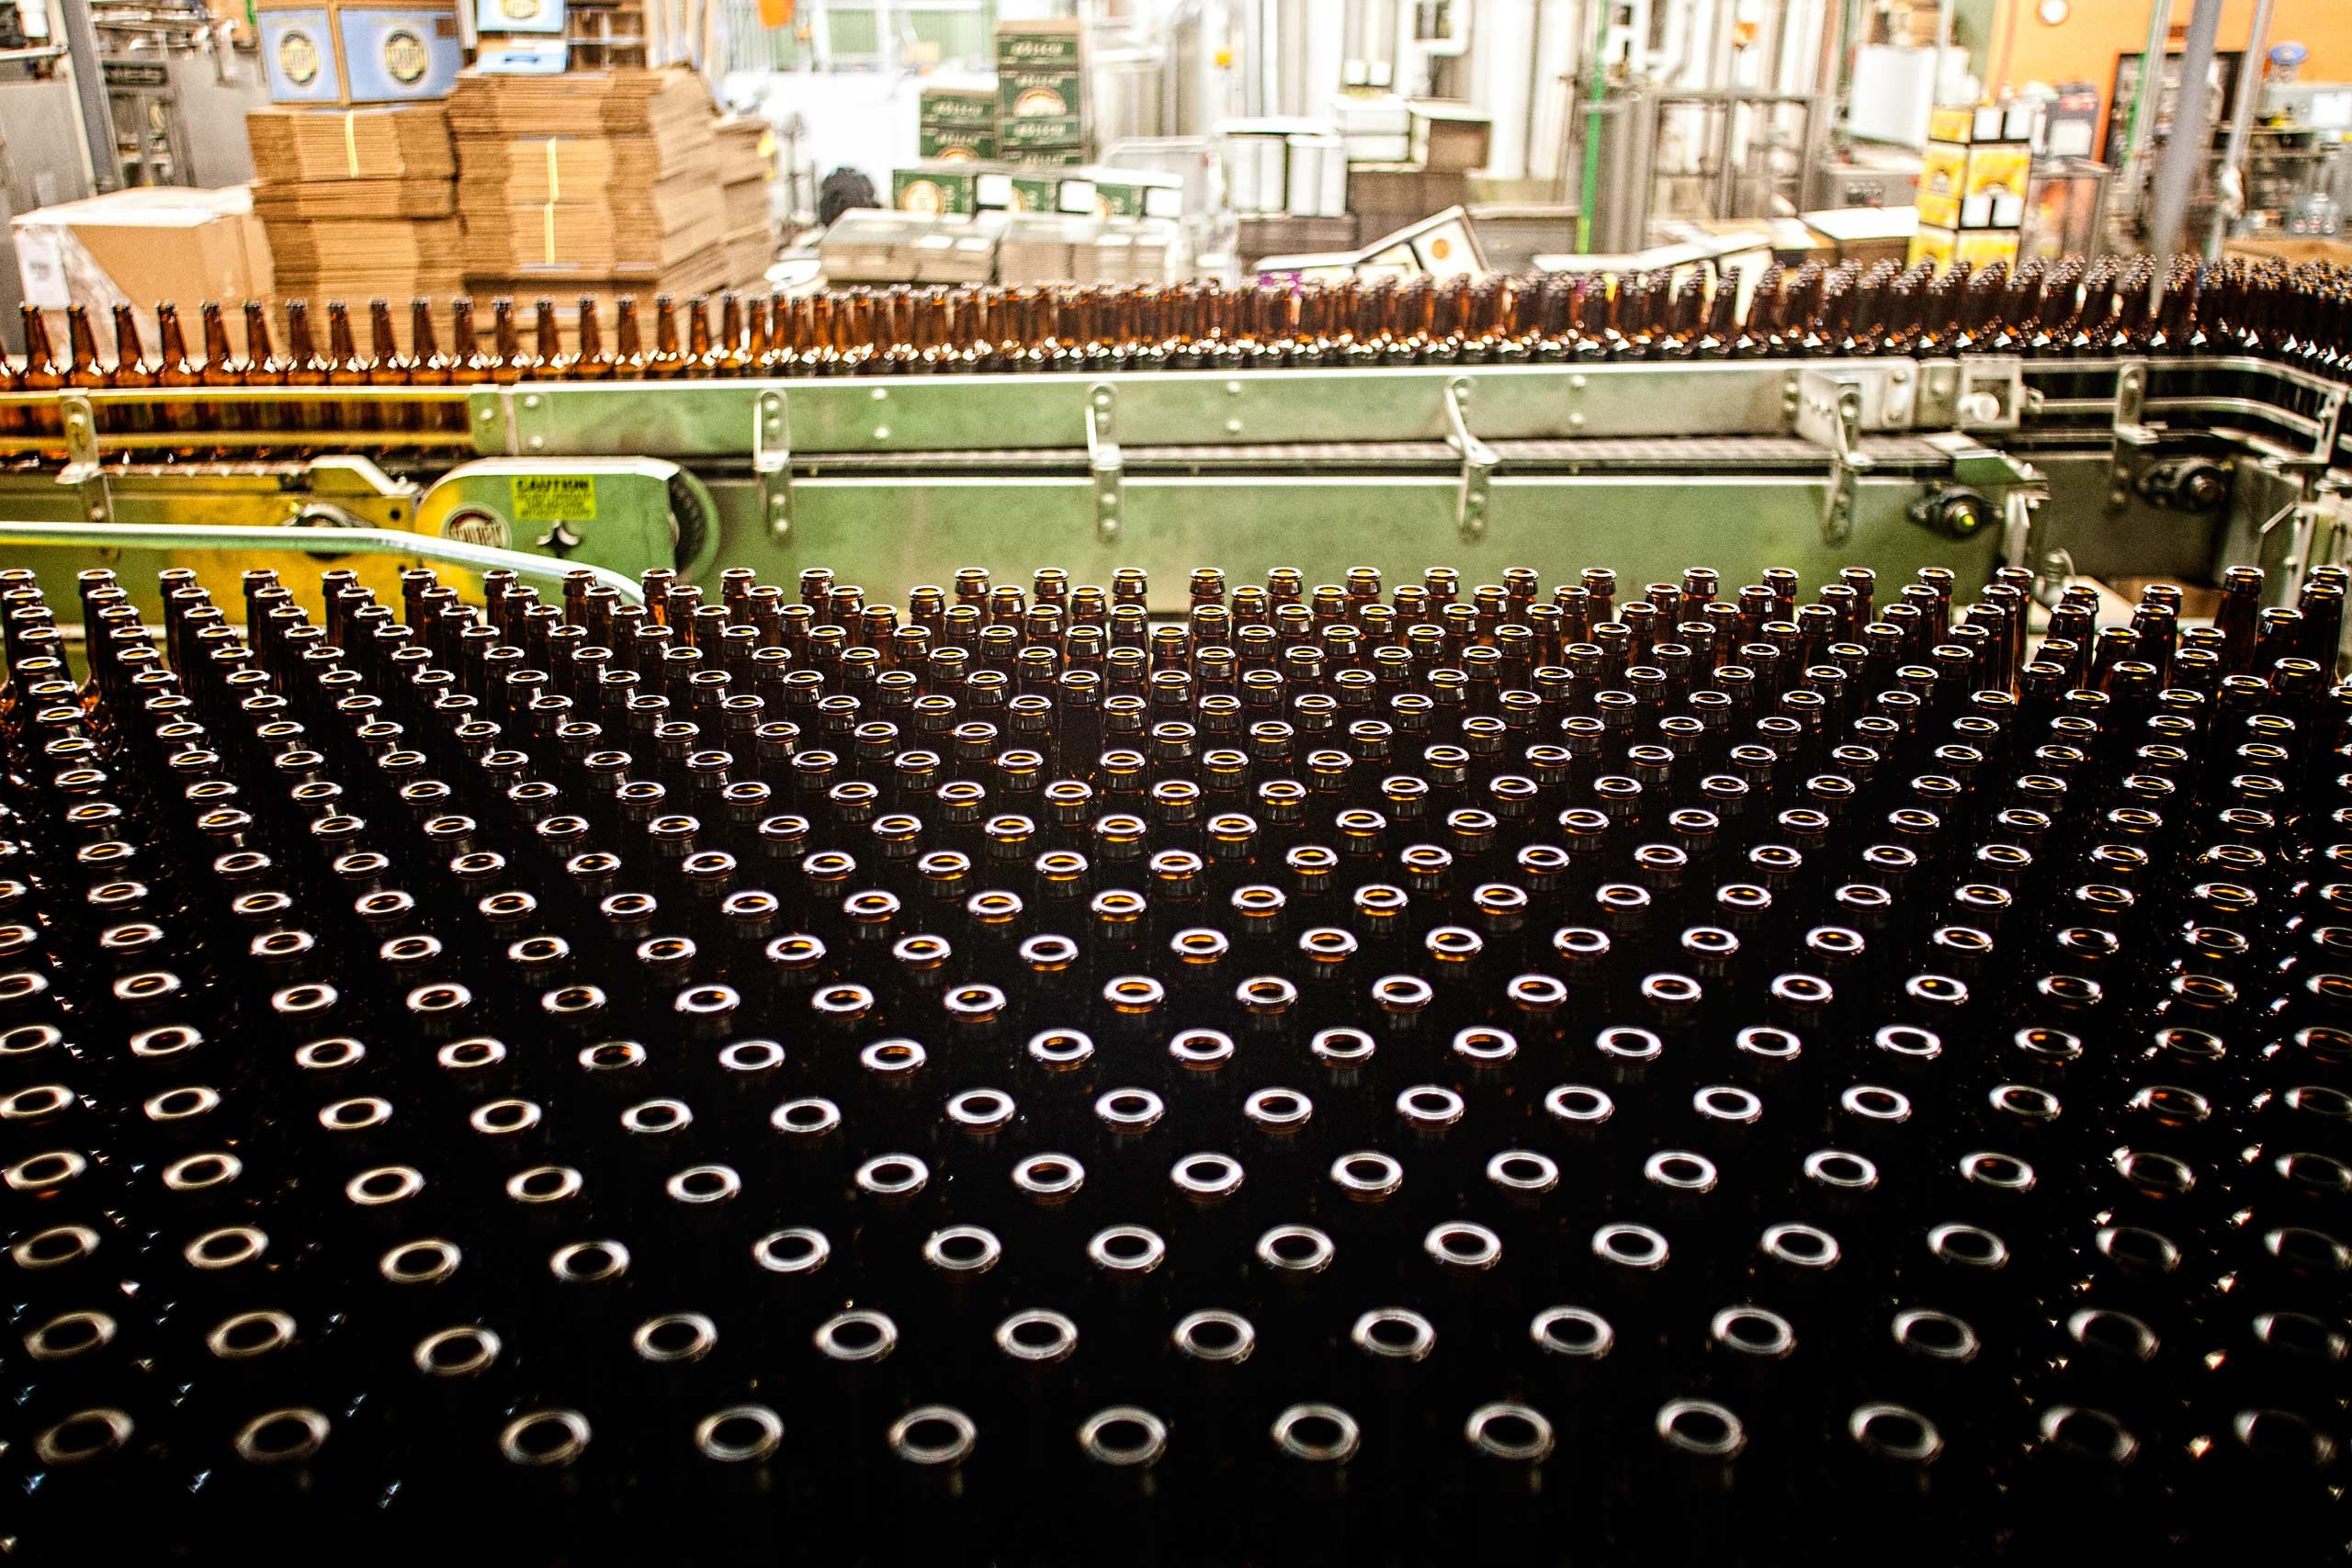 Production Line of Empty Beer Bottles